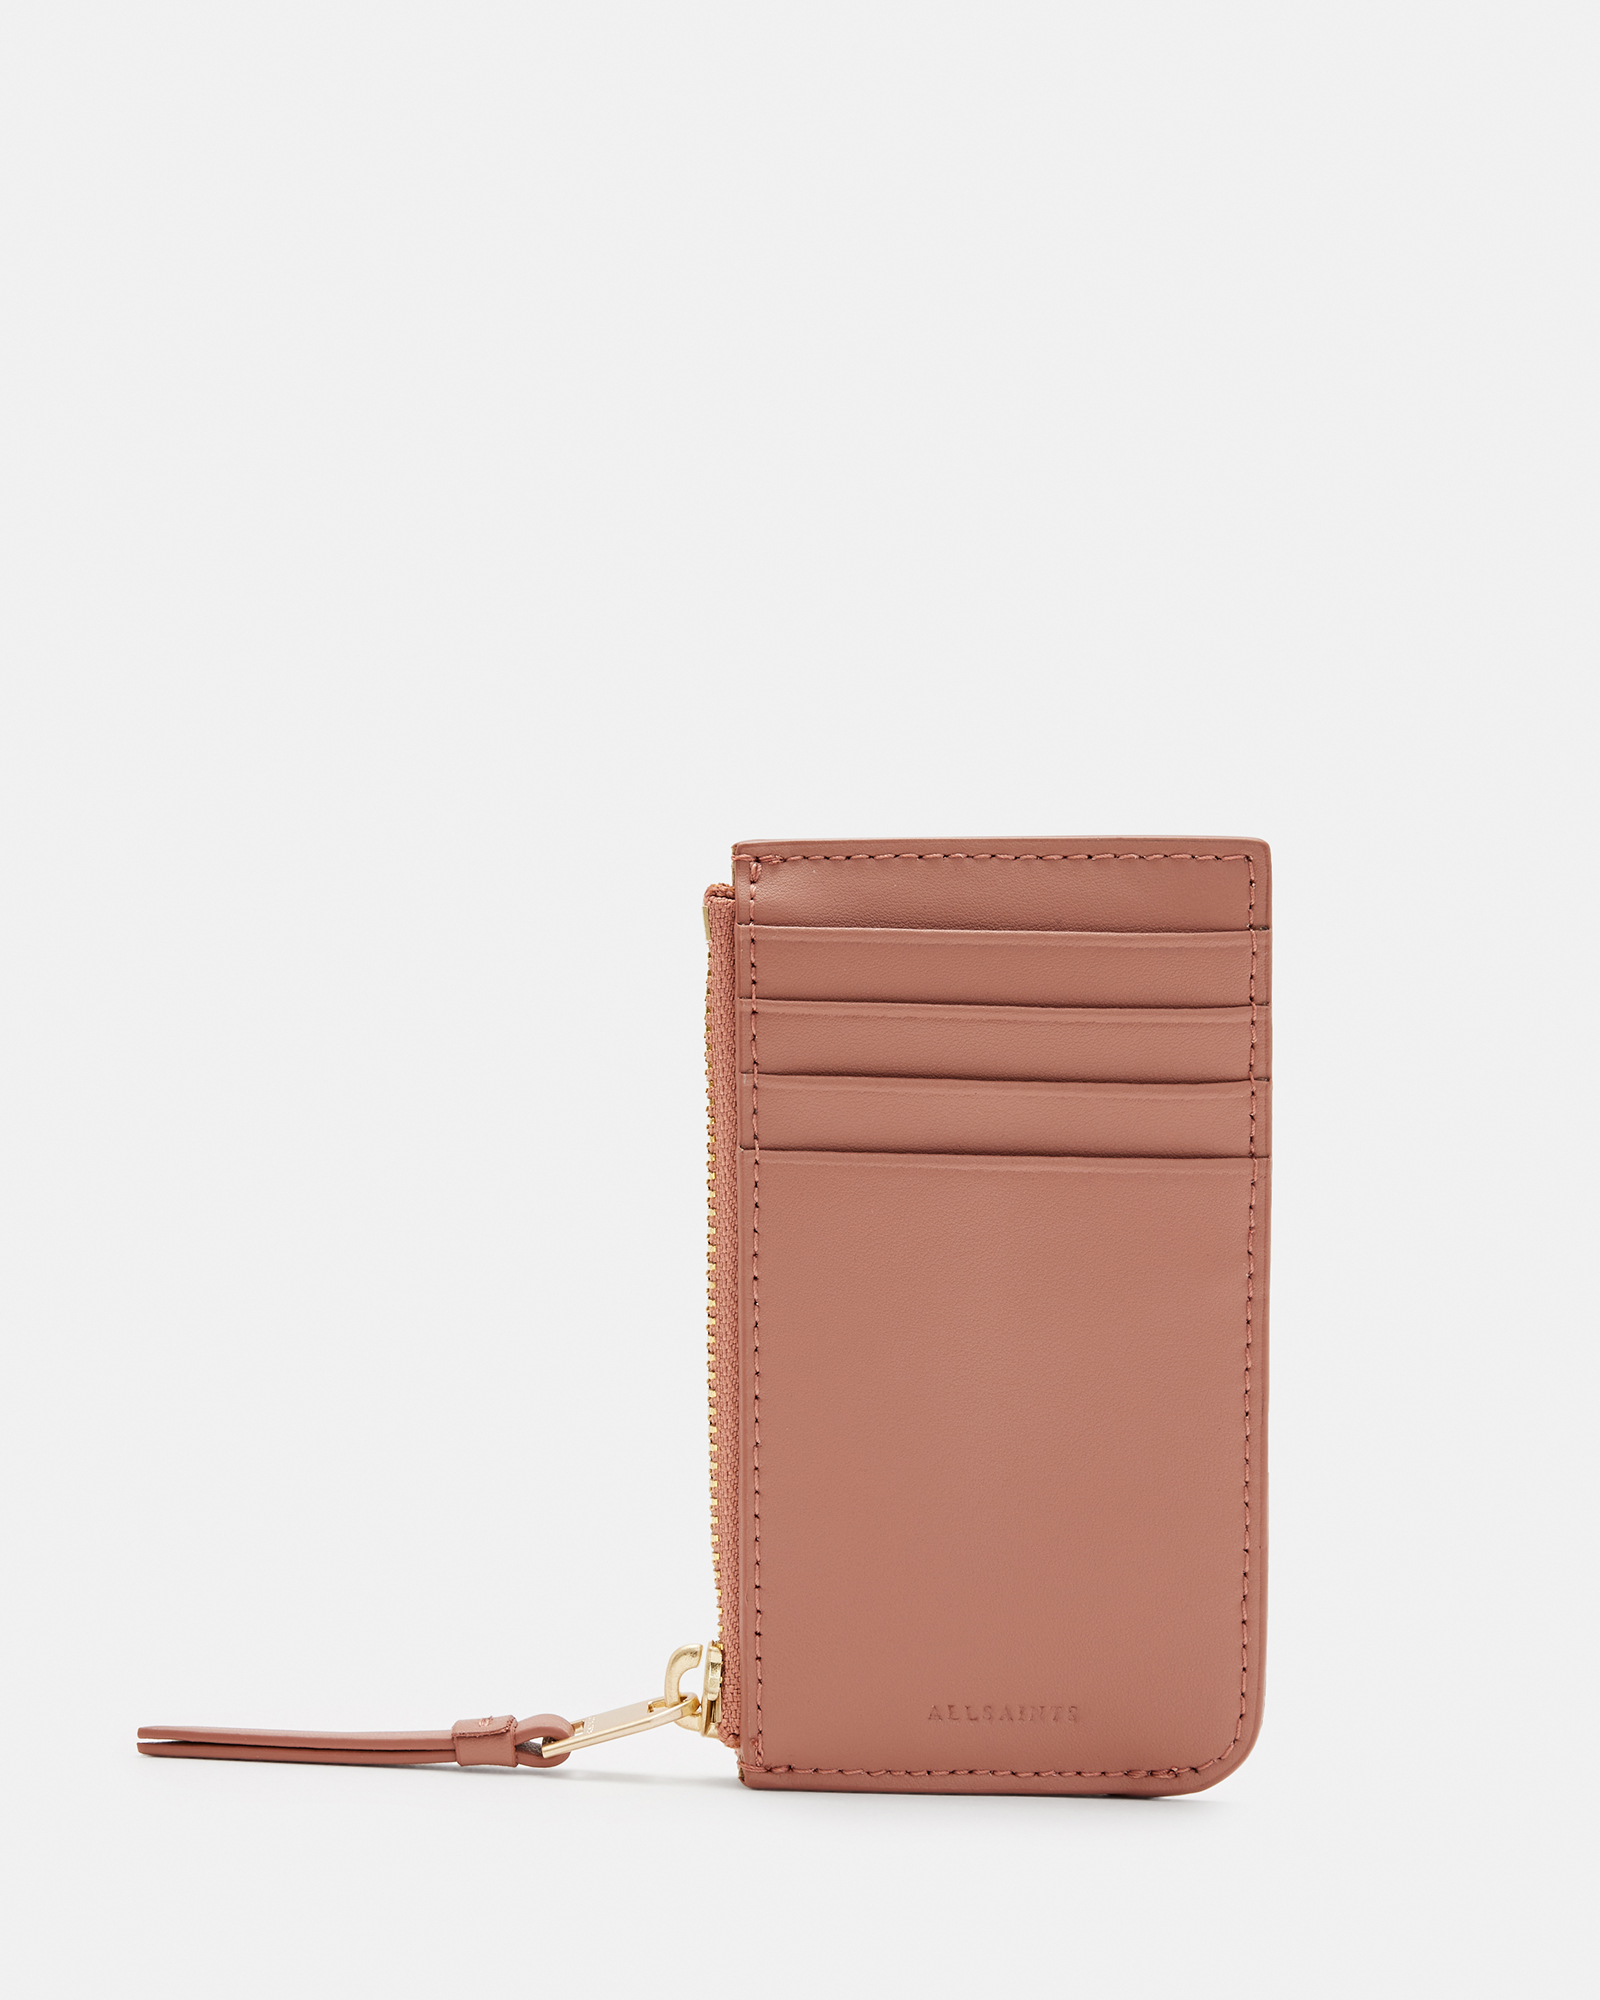 AllSaints Marlborough Leather Wallet